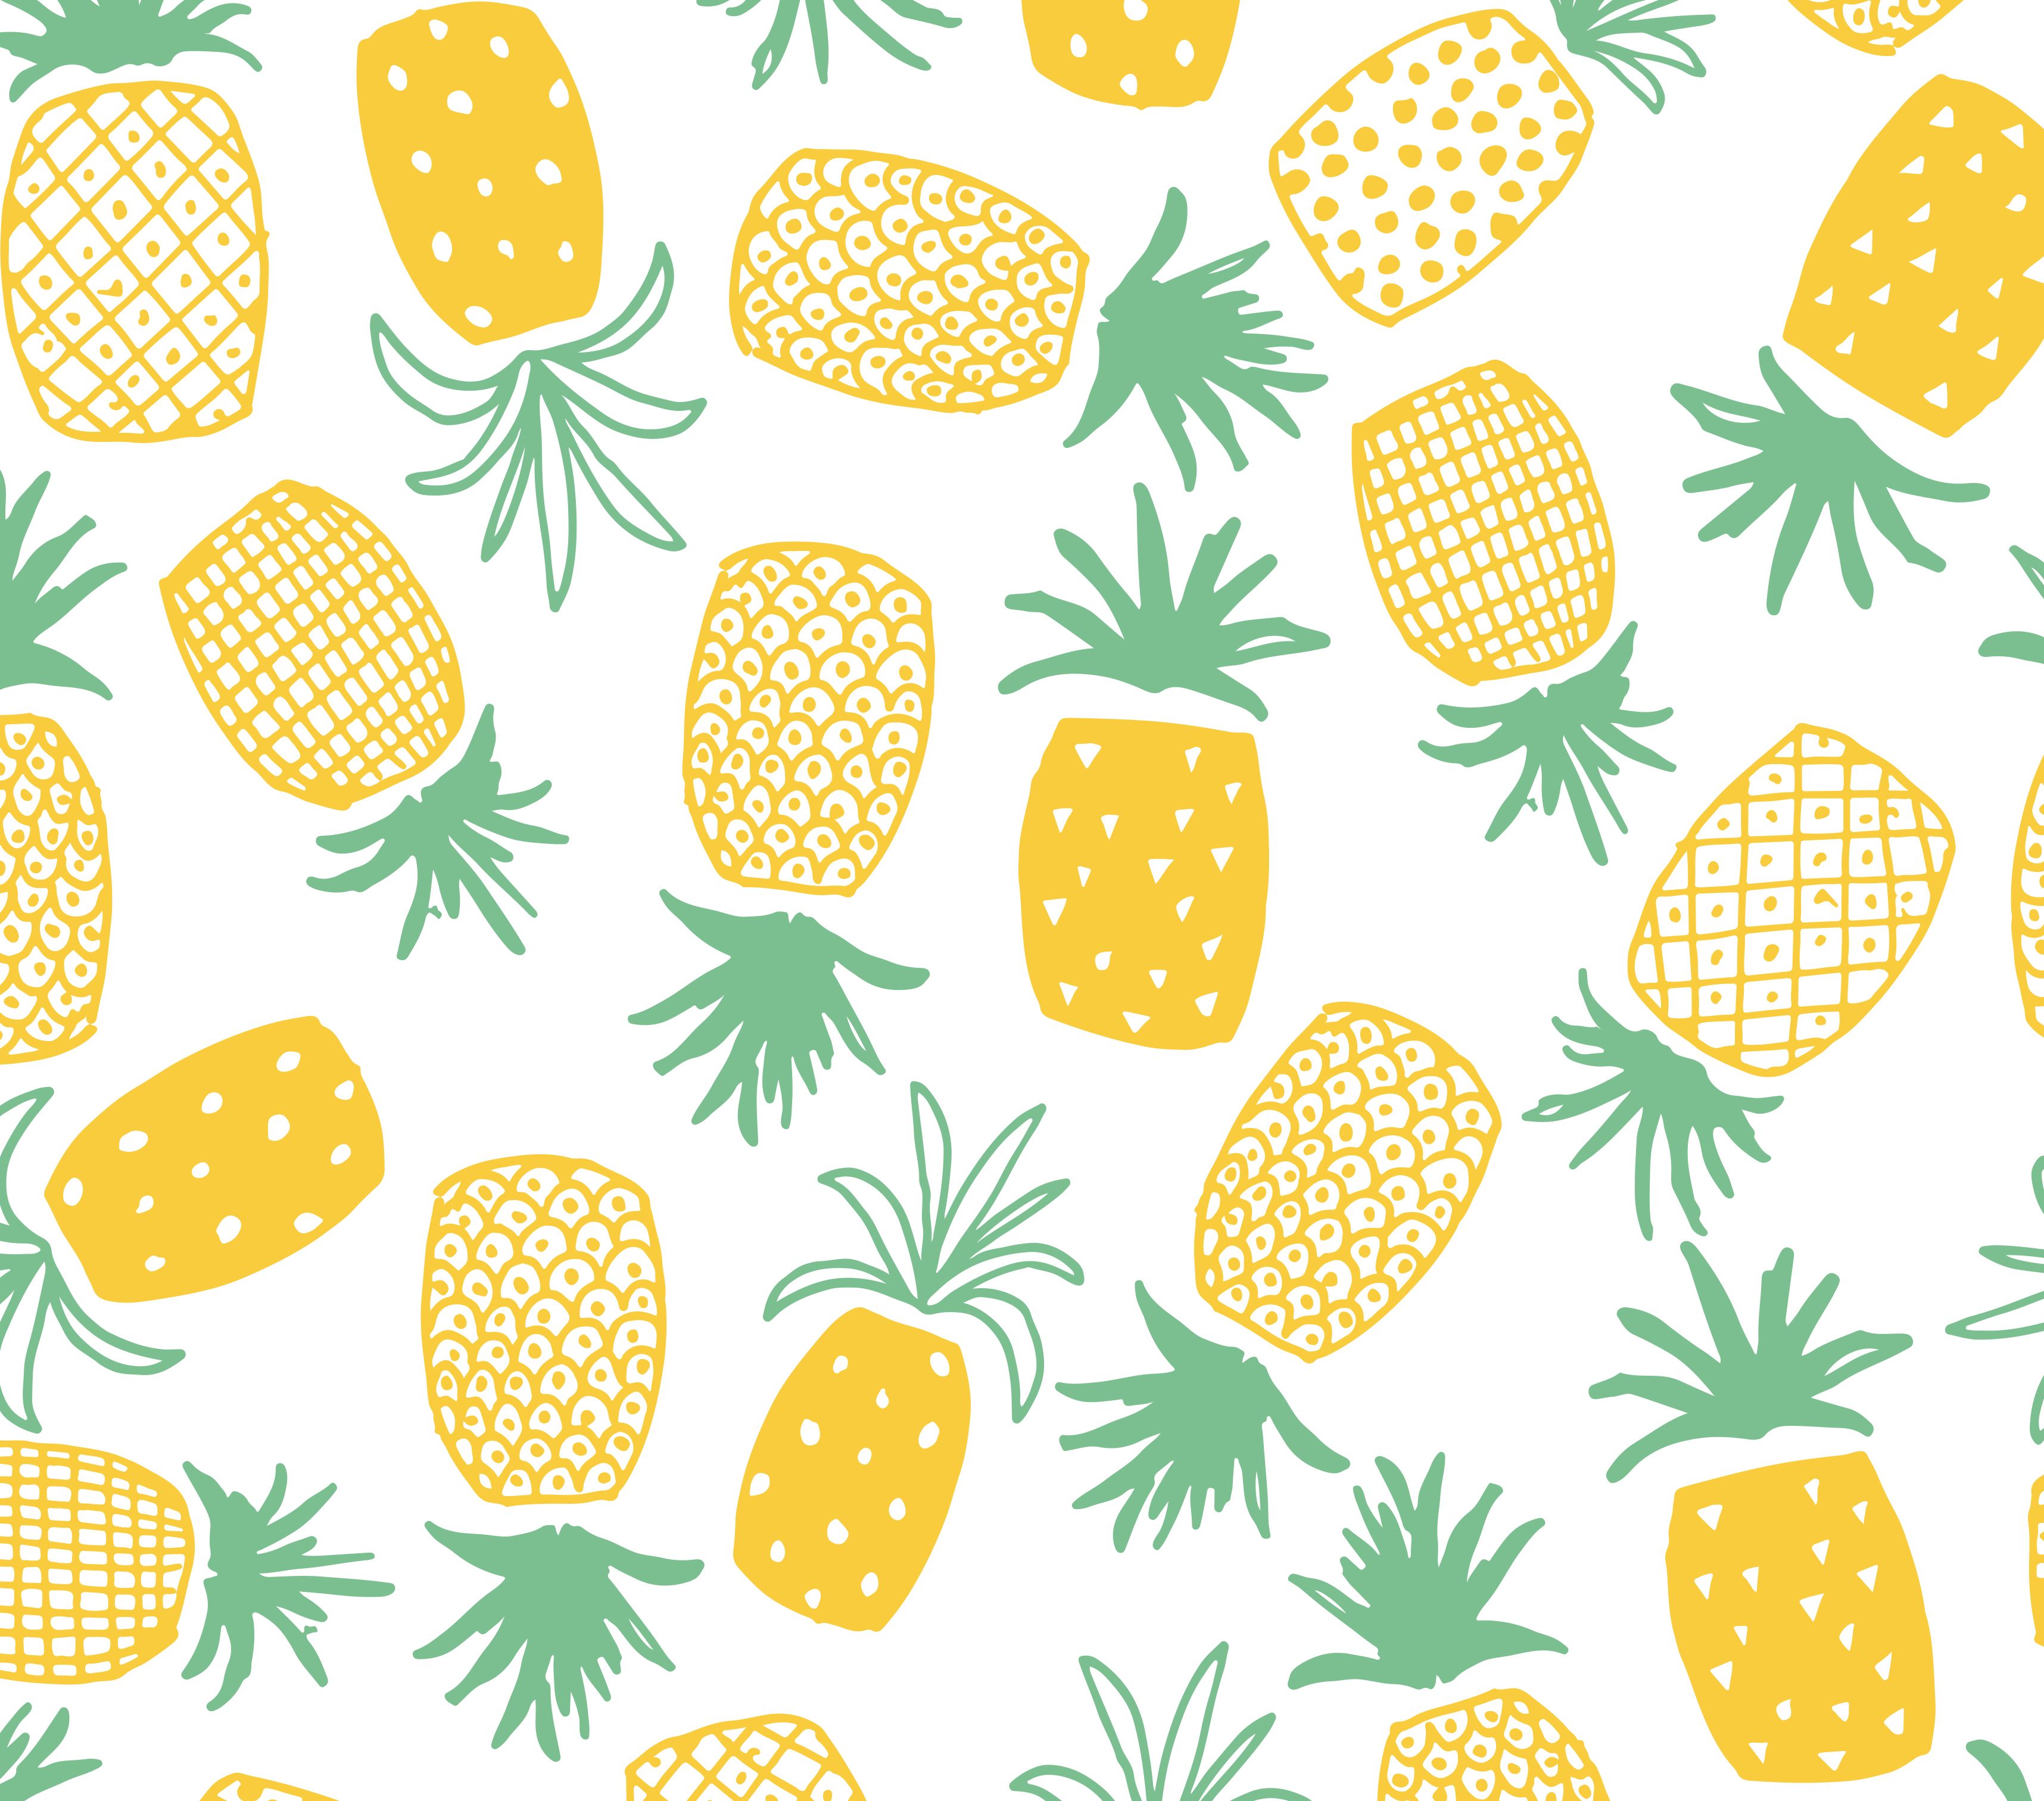 50 Kawaii Watercolor Pineapple Wallpapers   Download at WallpaperBro